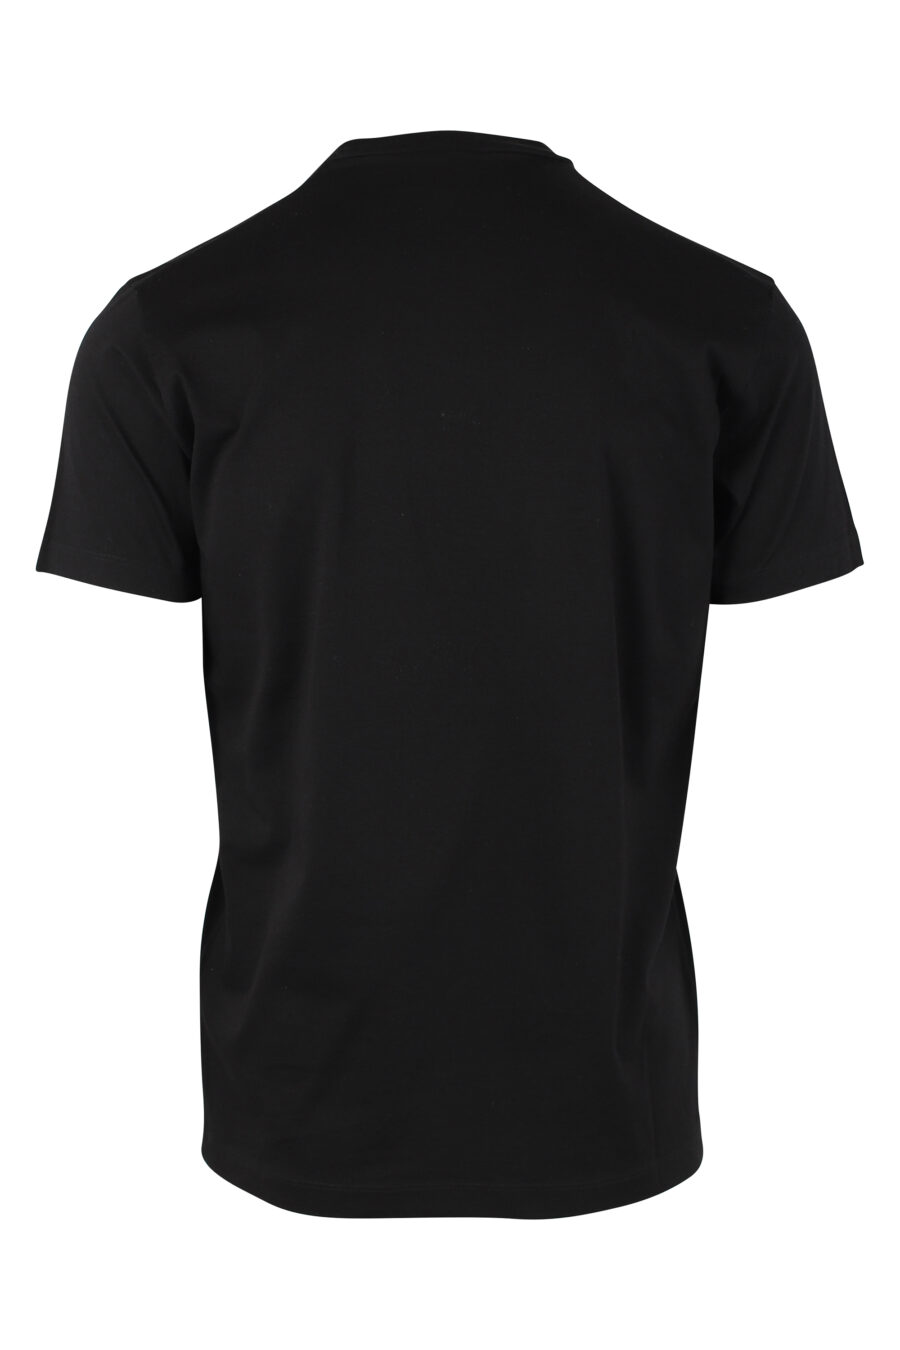 Camiseta negra con logo "icon sunset" - IMG 9756